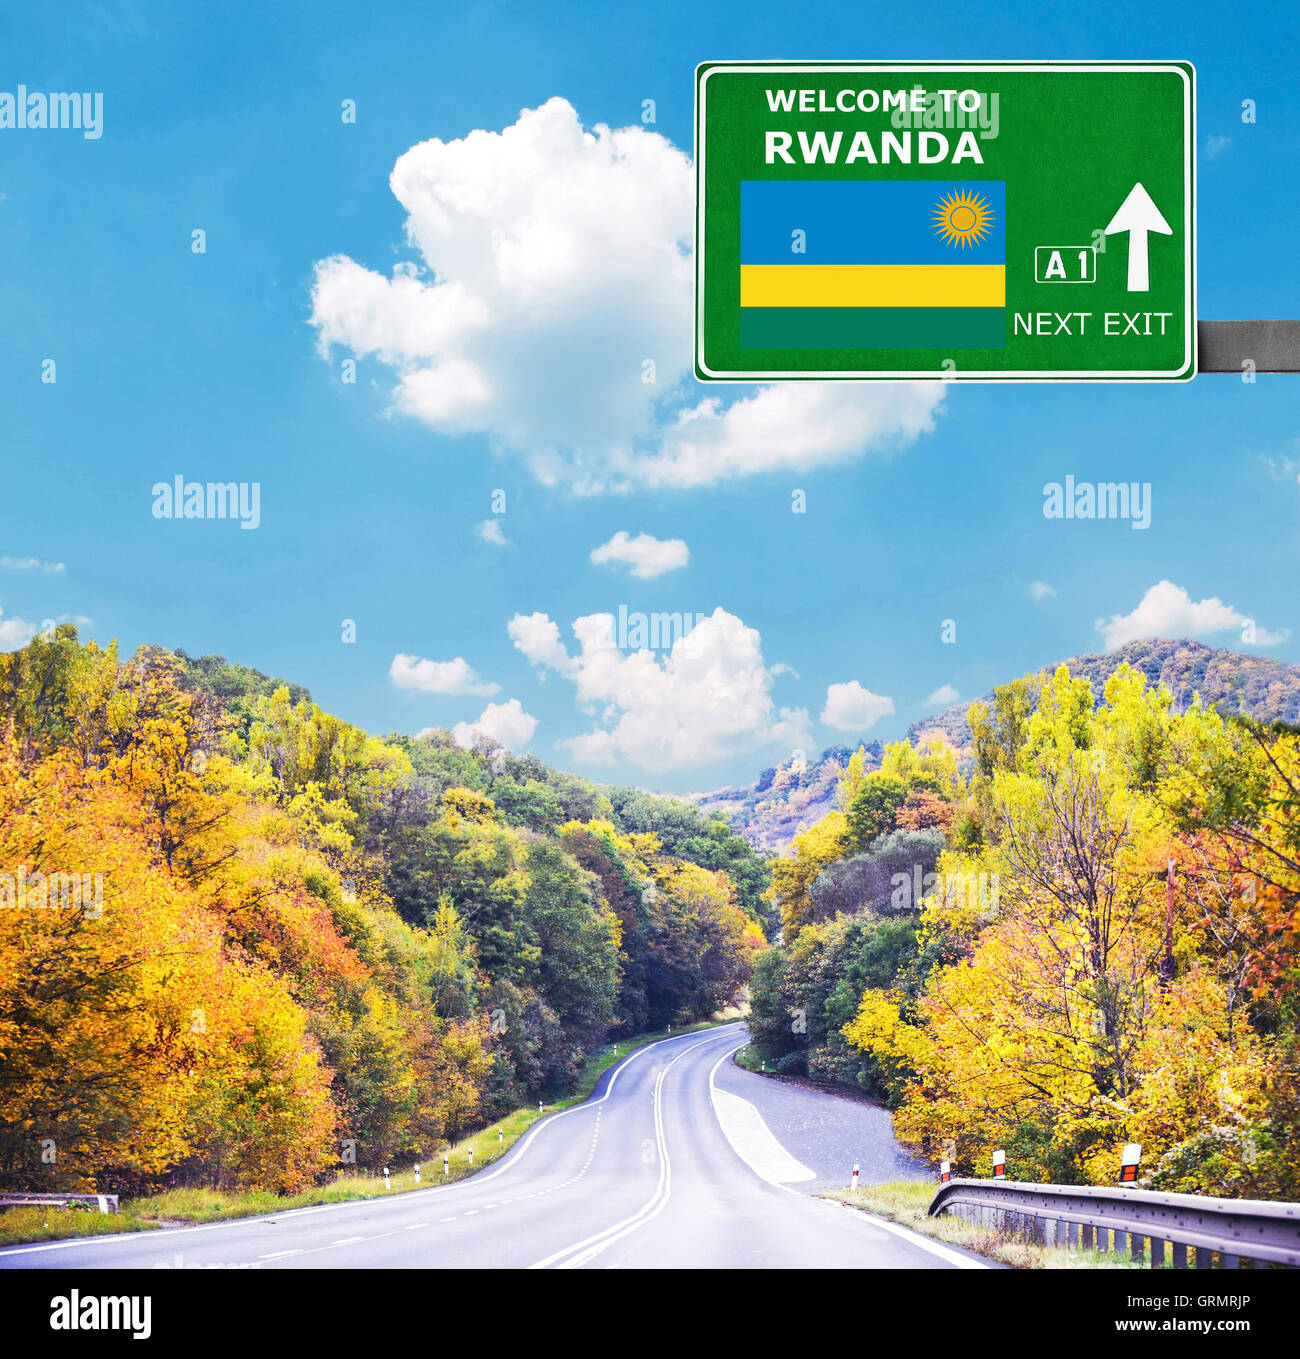 Ruanda-Schild gegen klar blauen Himmel Stockfoto